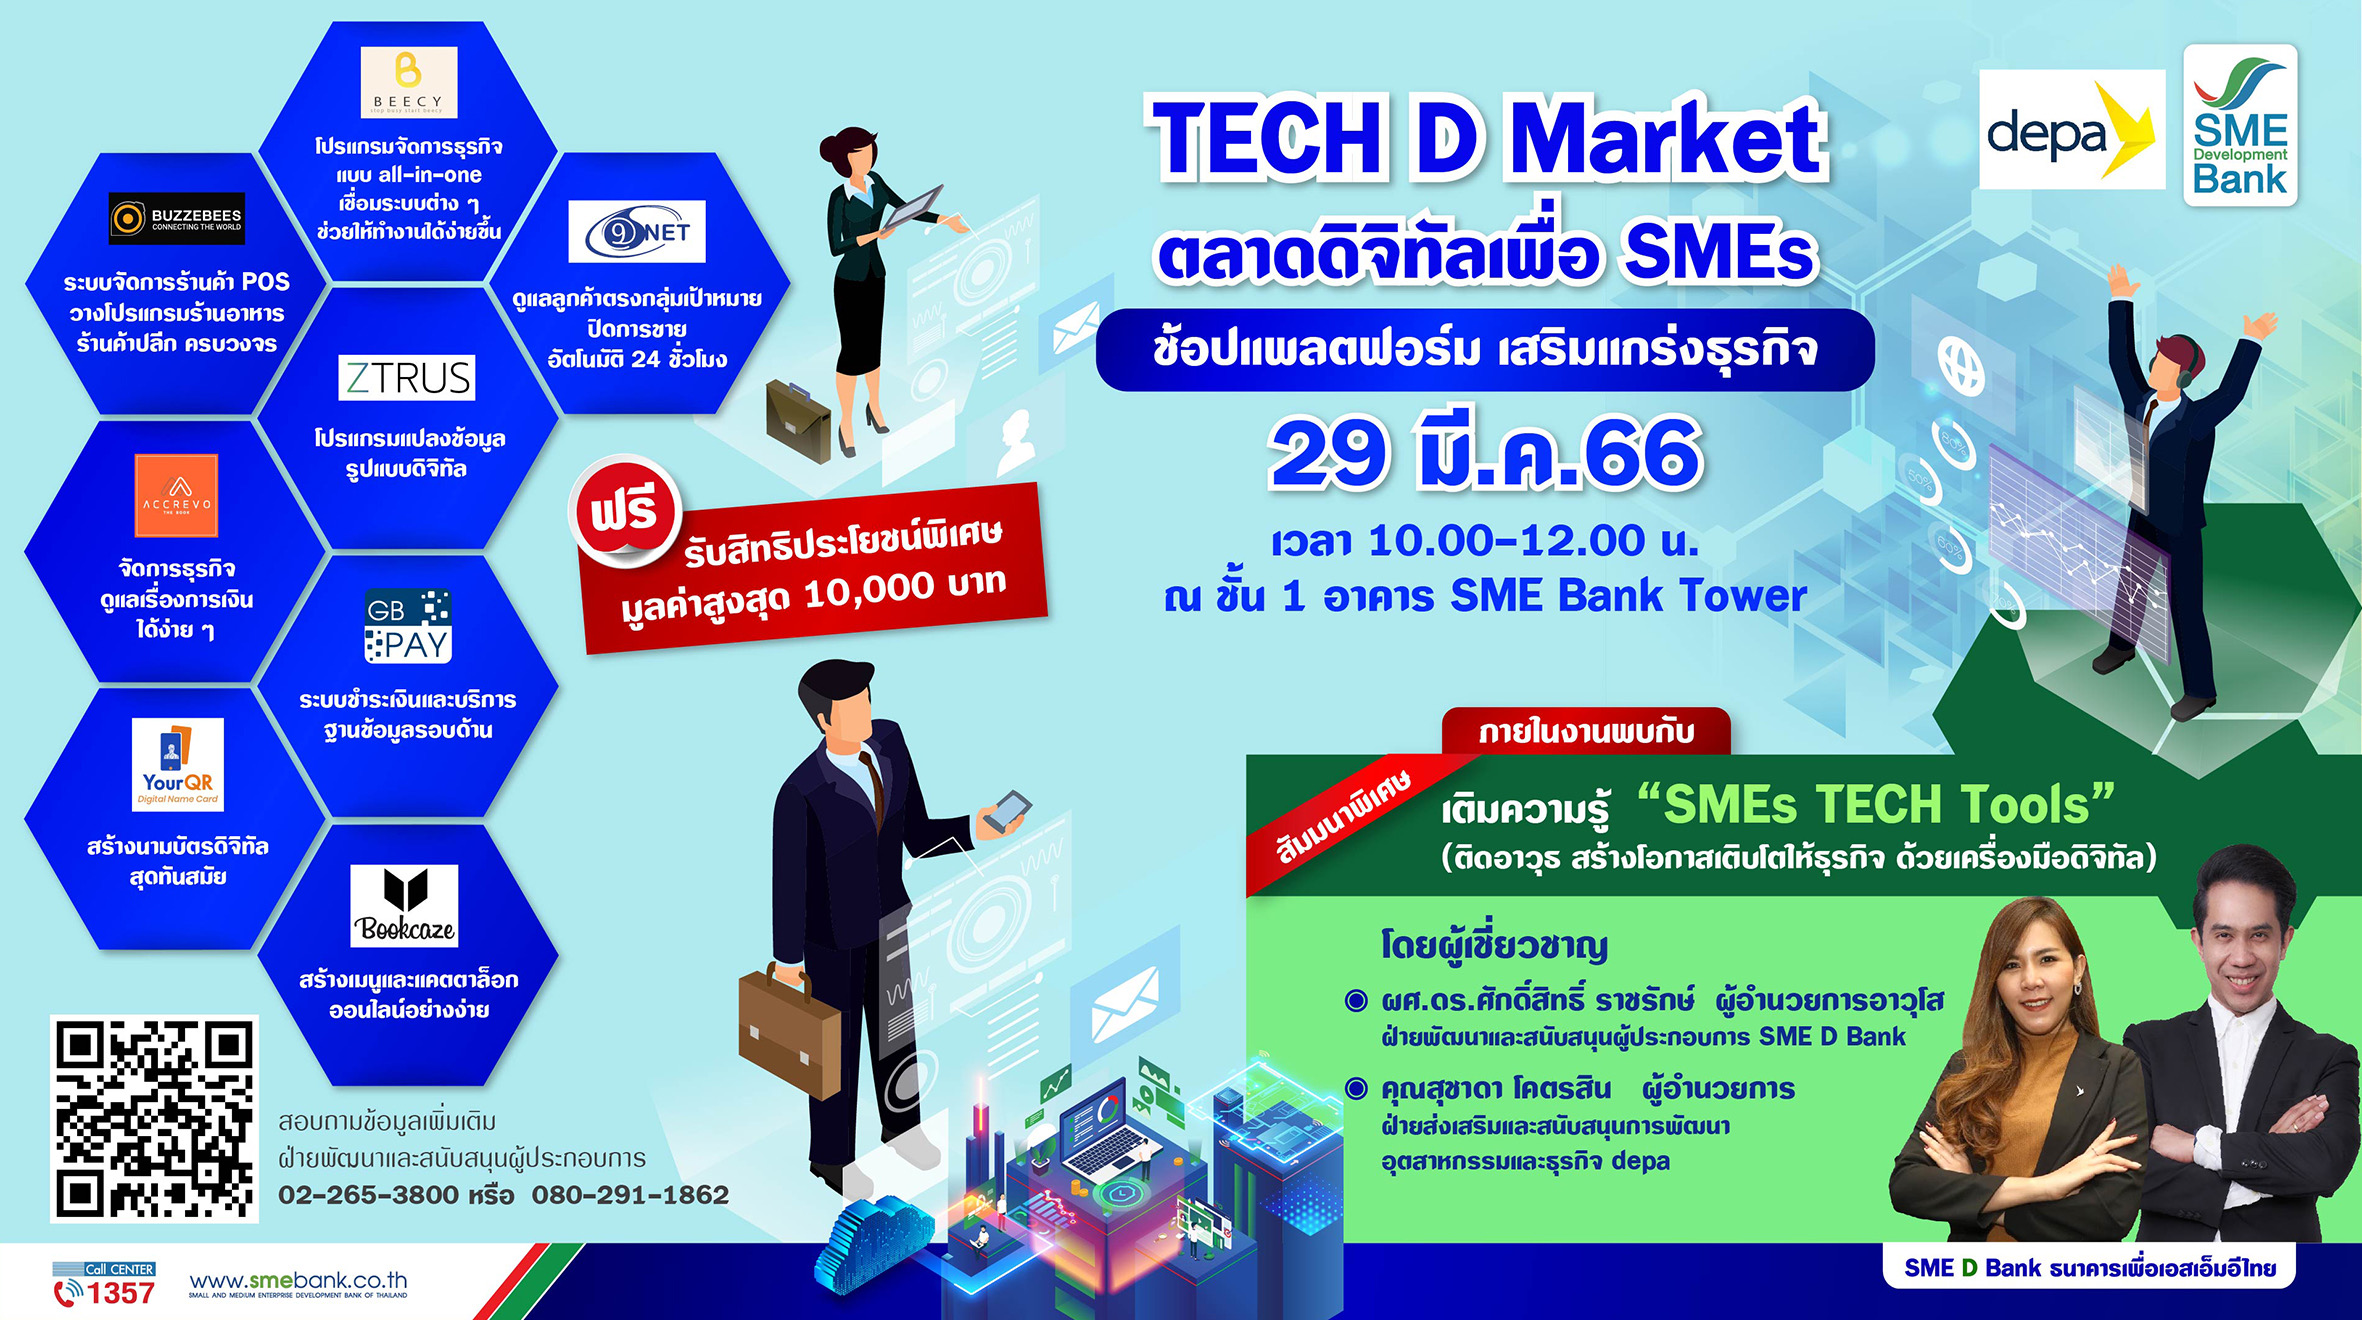 SME D Bank - depa เปิดตลาด ‘TECH D Market’ 29 มีนานี้